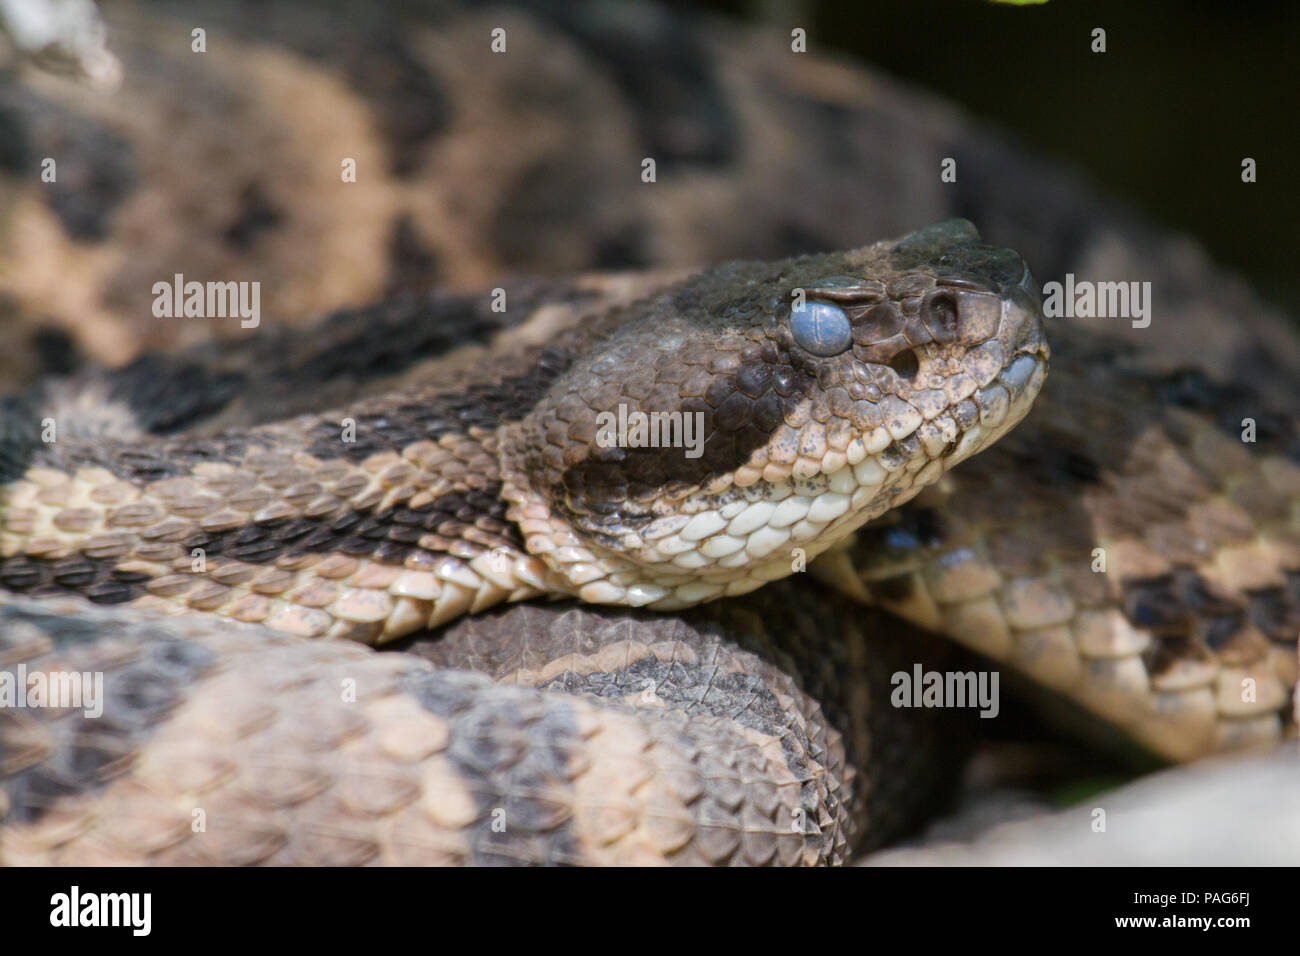 Close-up of a canebrake rattlesnake, Crotalus horridus, showing heat sensing pits. Stock Photo